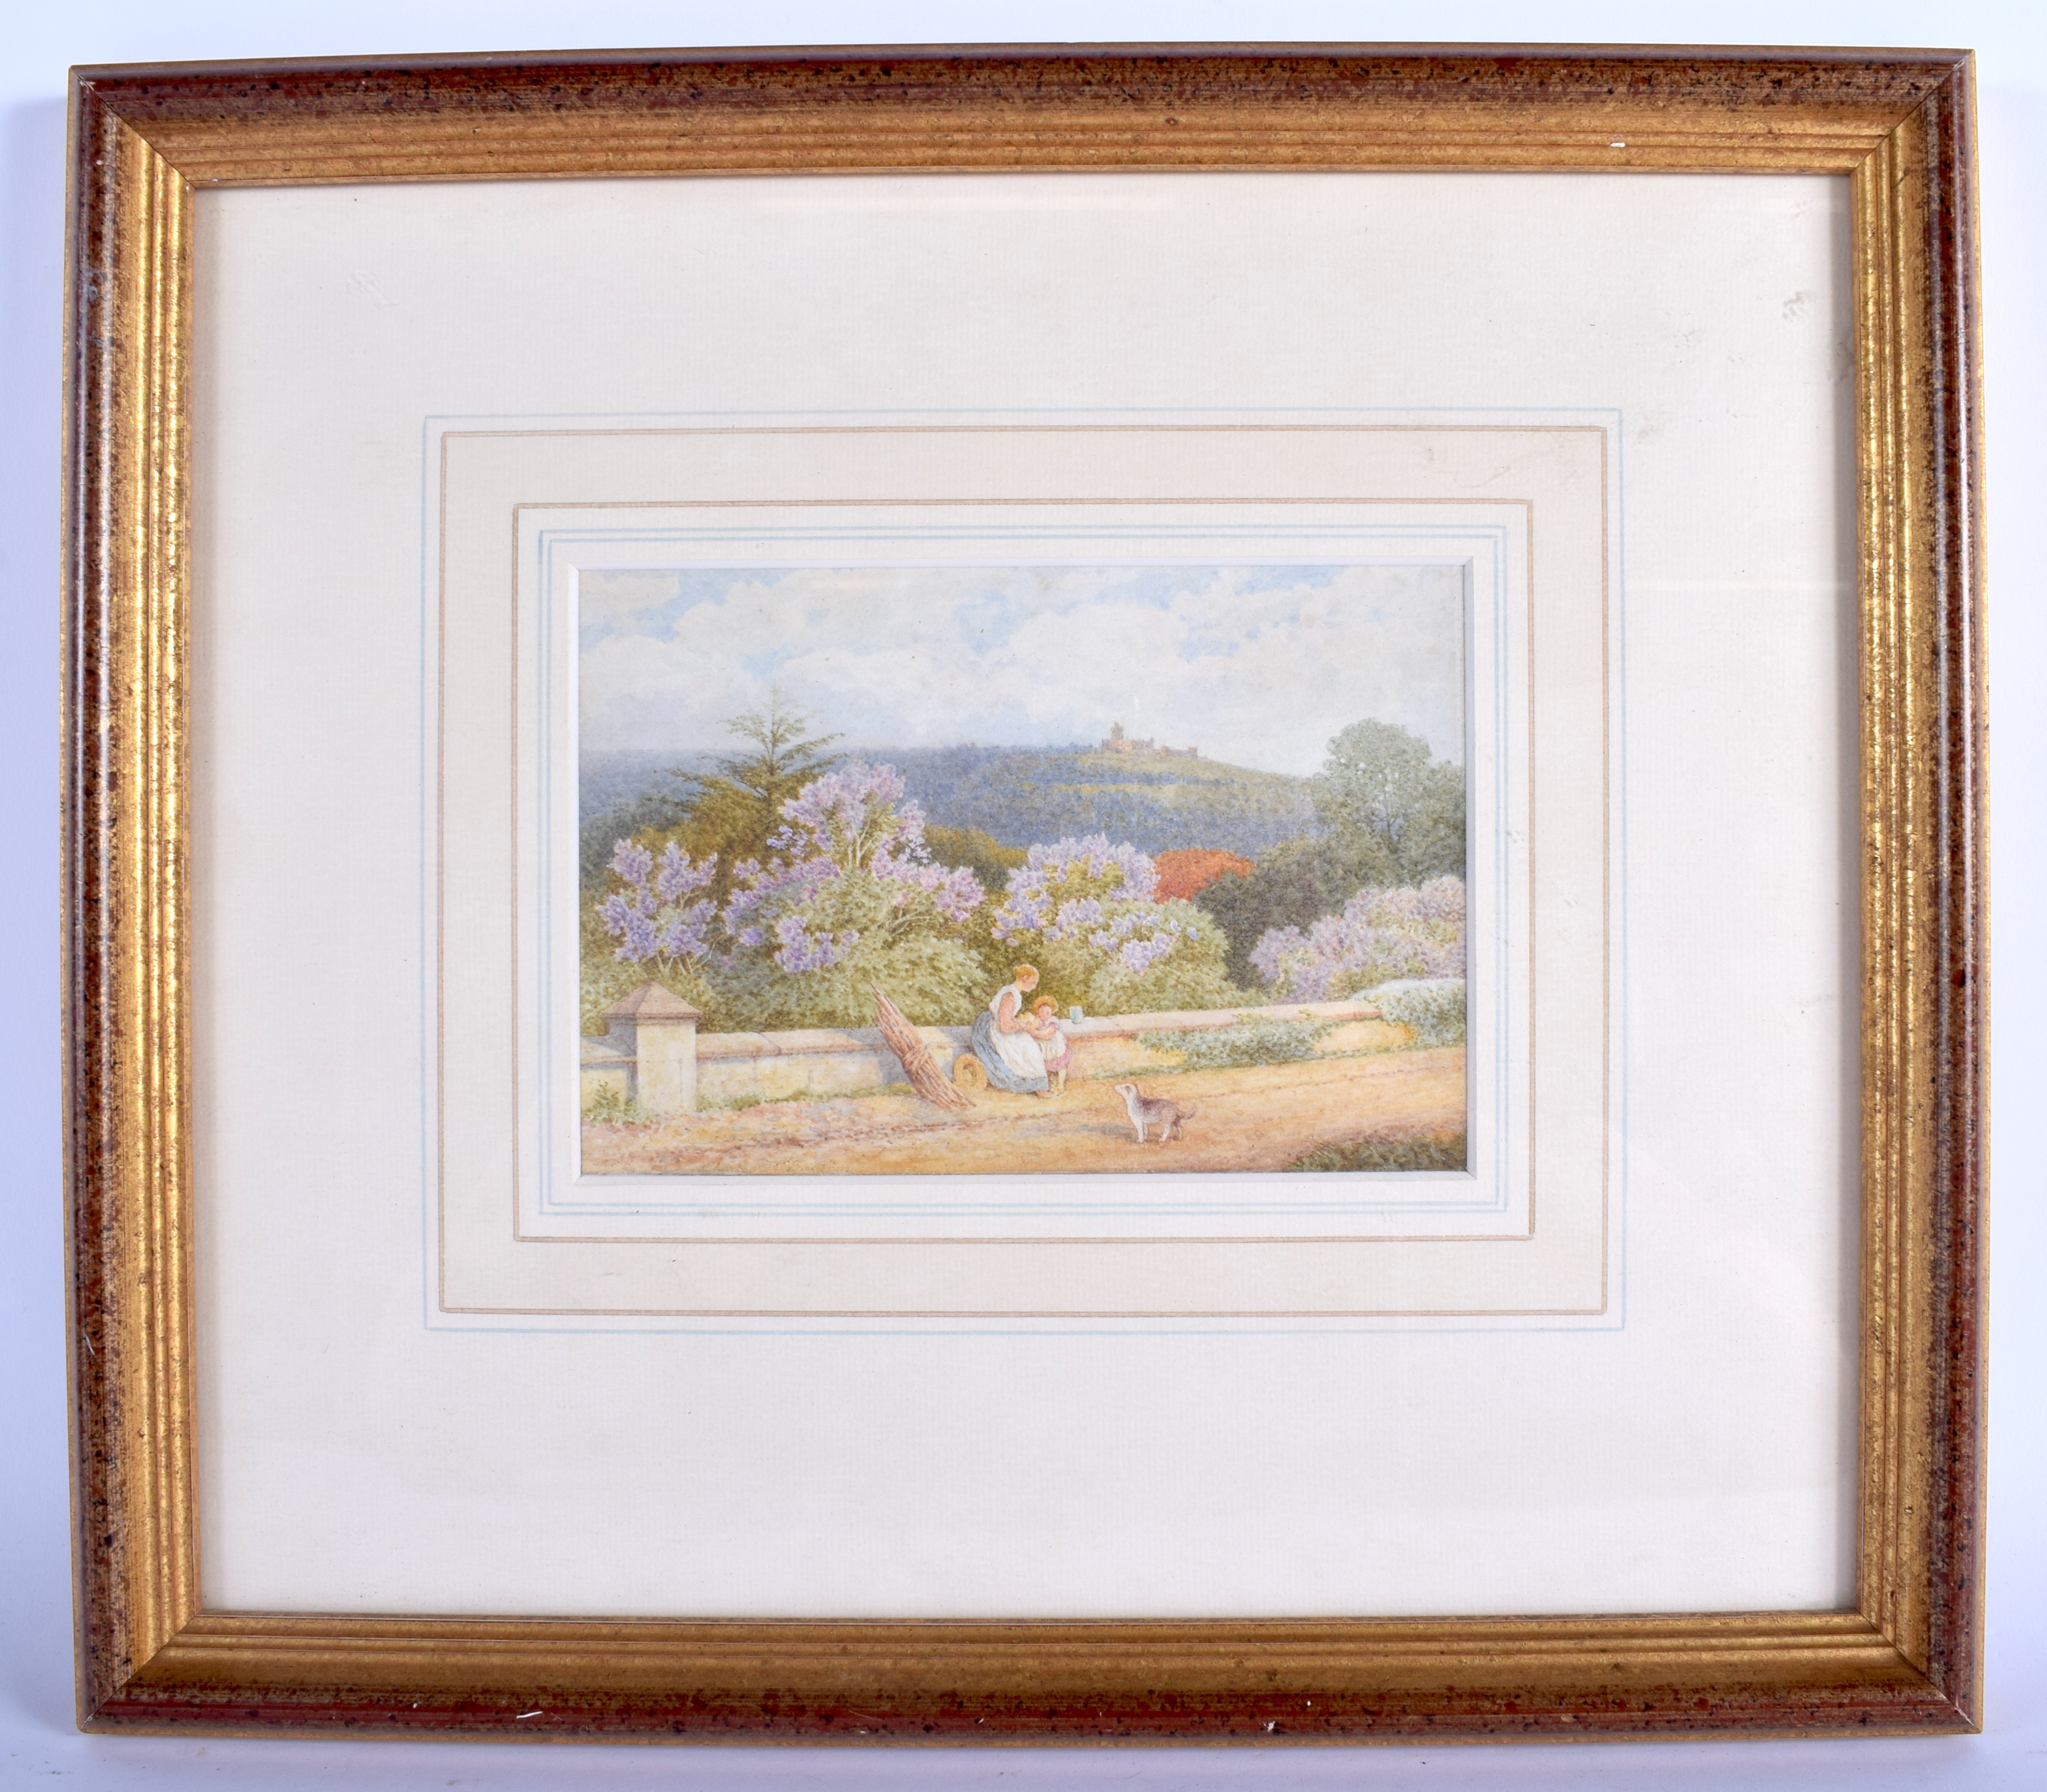 Charles Prosper Sainton (1861-1914) Rural scene, Watercolour. Image 19 cm x 13 cm.